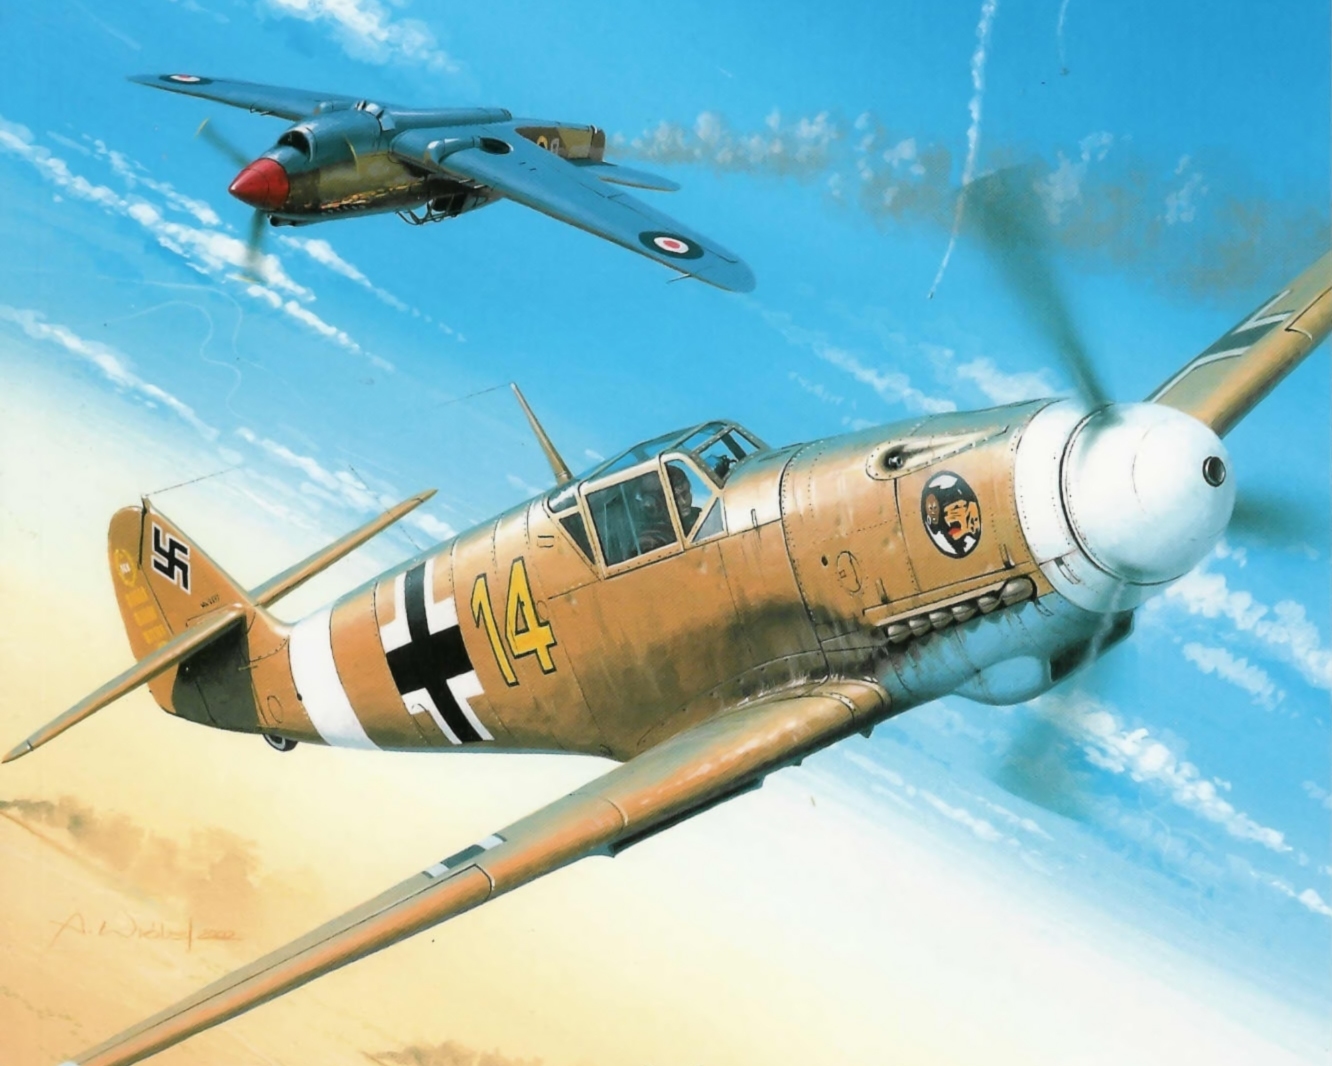 Wróbel Arkadiusz. Истребители Bf -109.